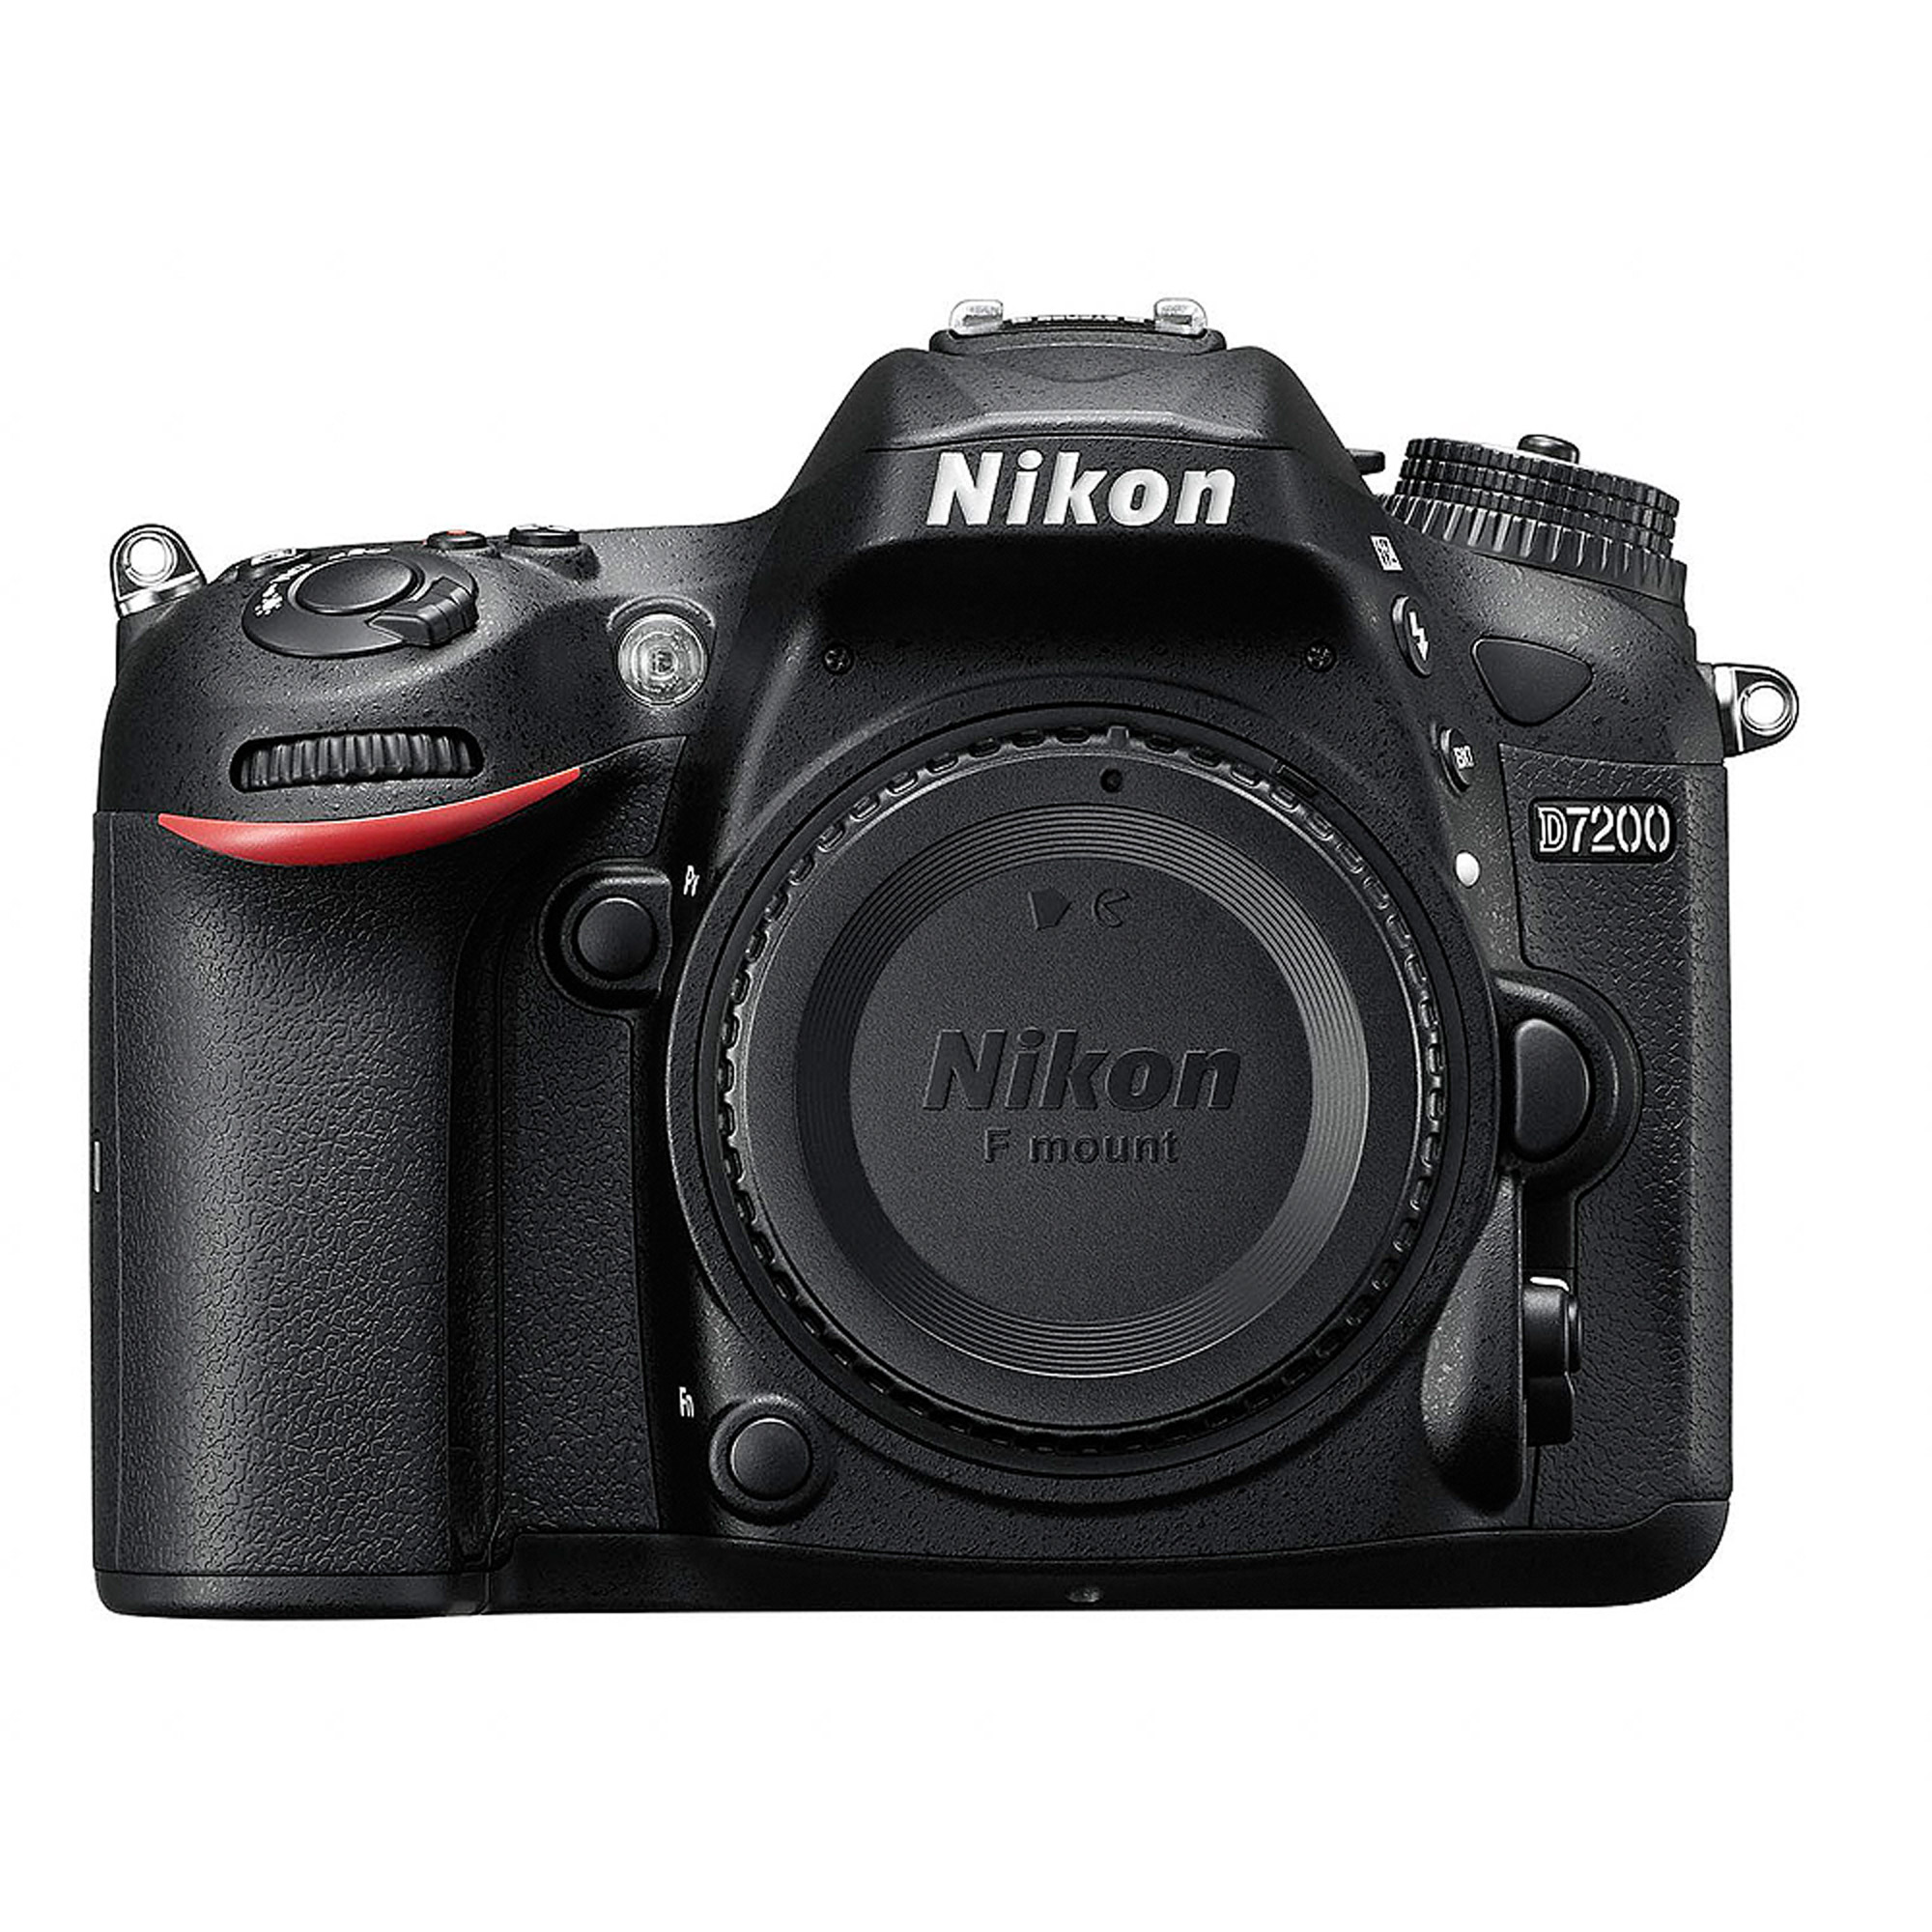 Nikon D7200 Black Friday & Cyber Monday Deals ([year]) 2